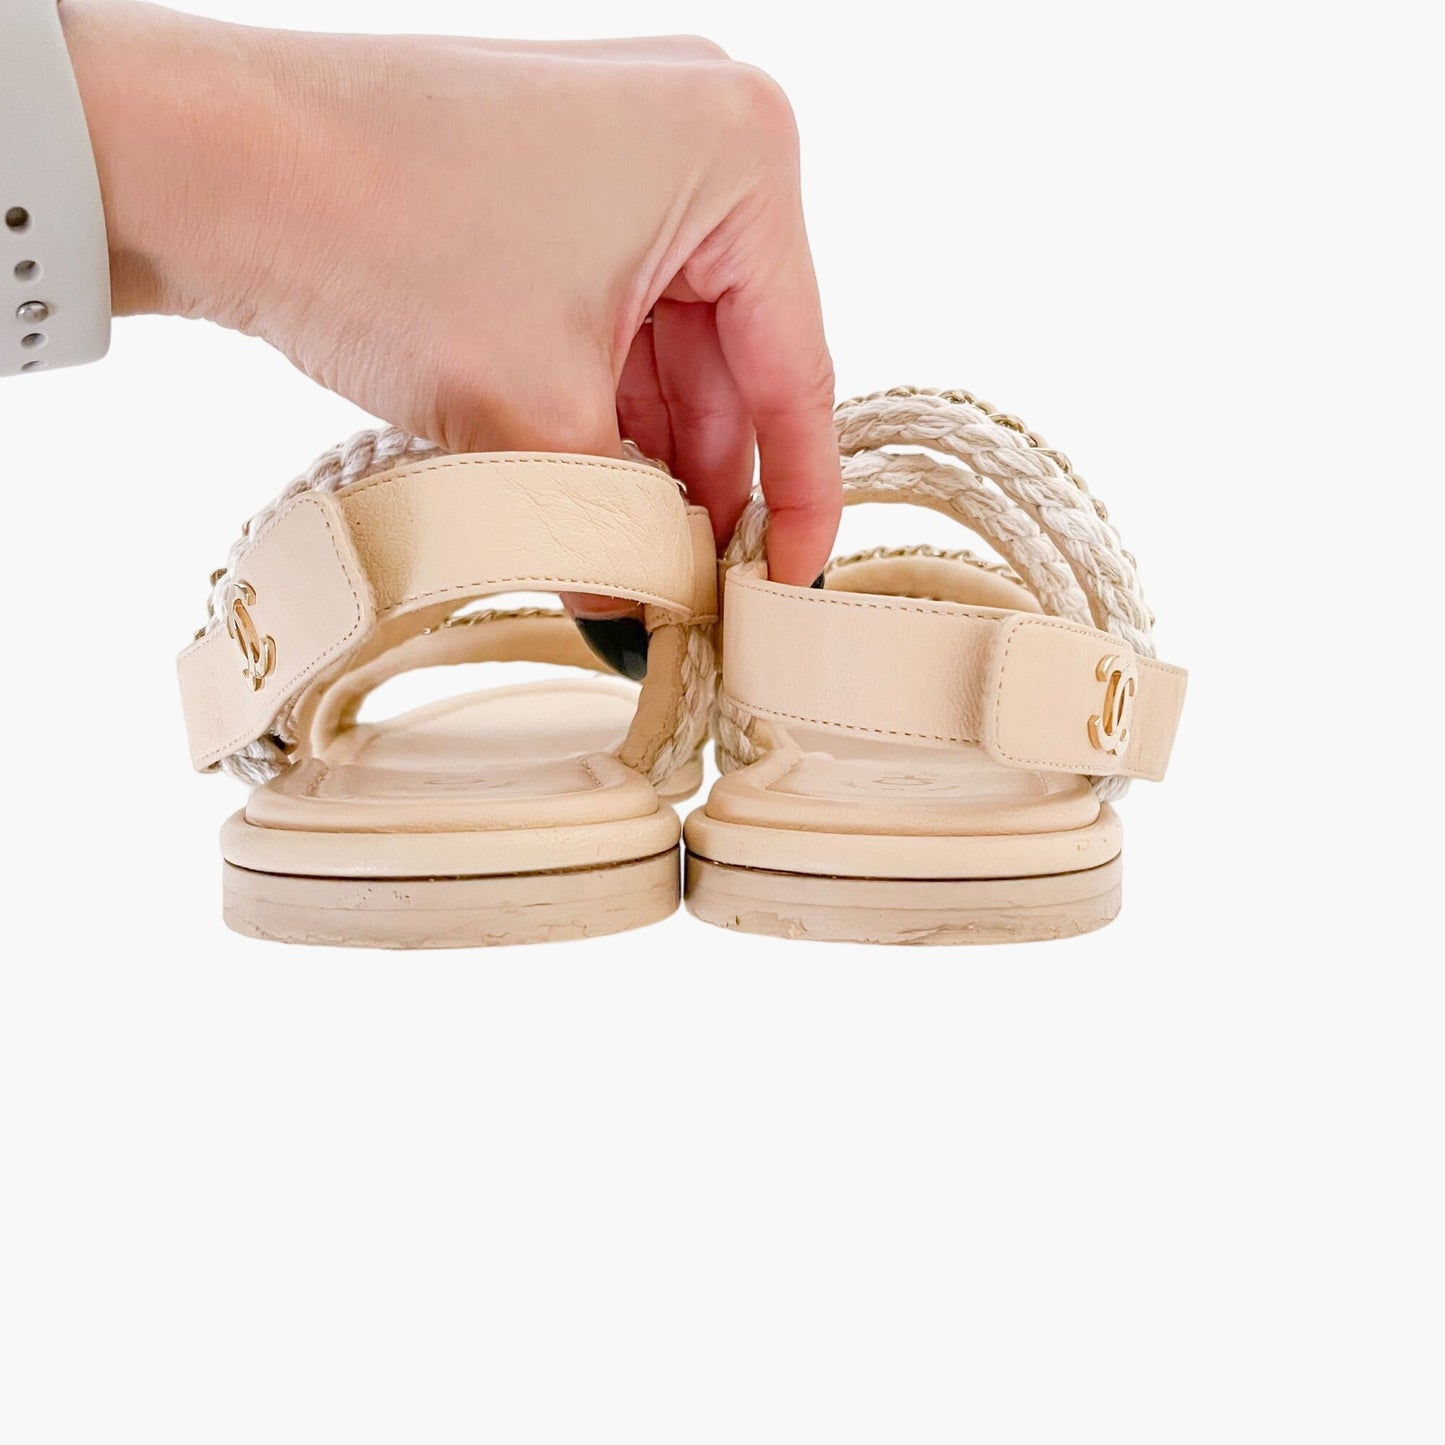 Chanel Spring/Summer 2022 Gladiator Sandals in Beige Size 37